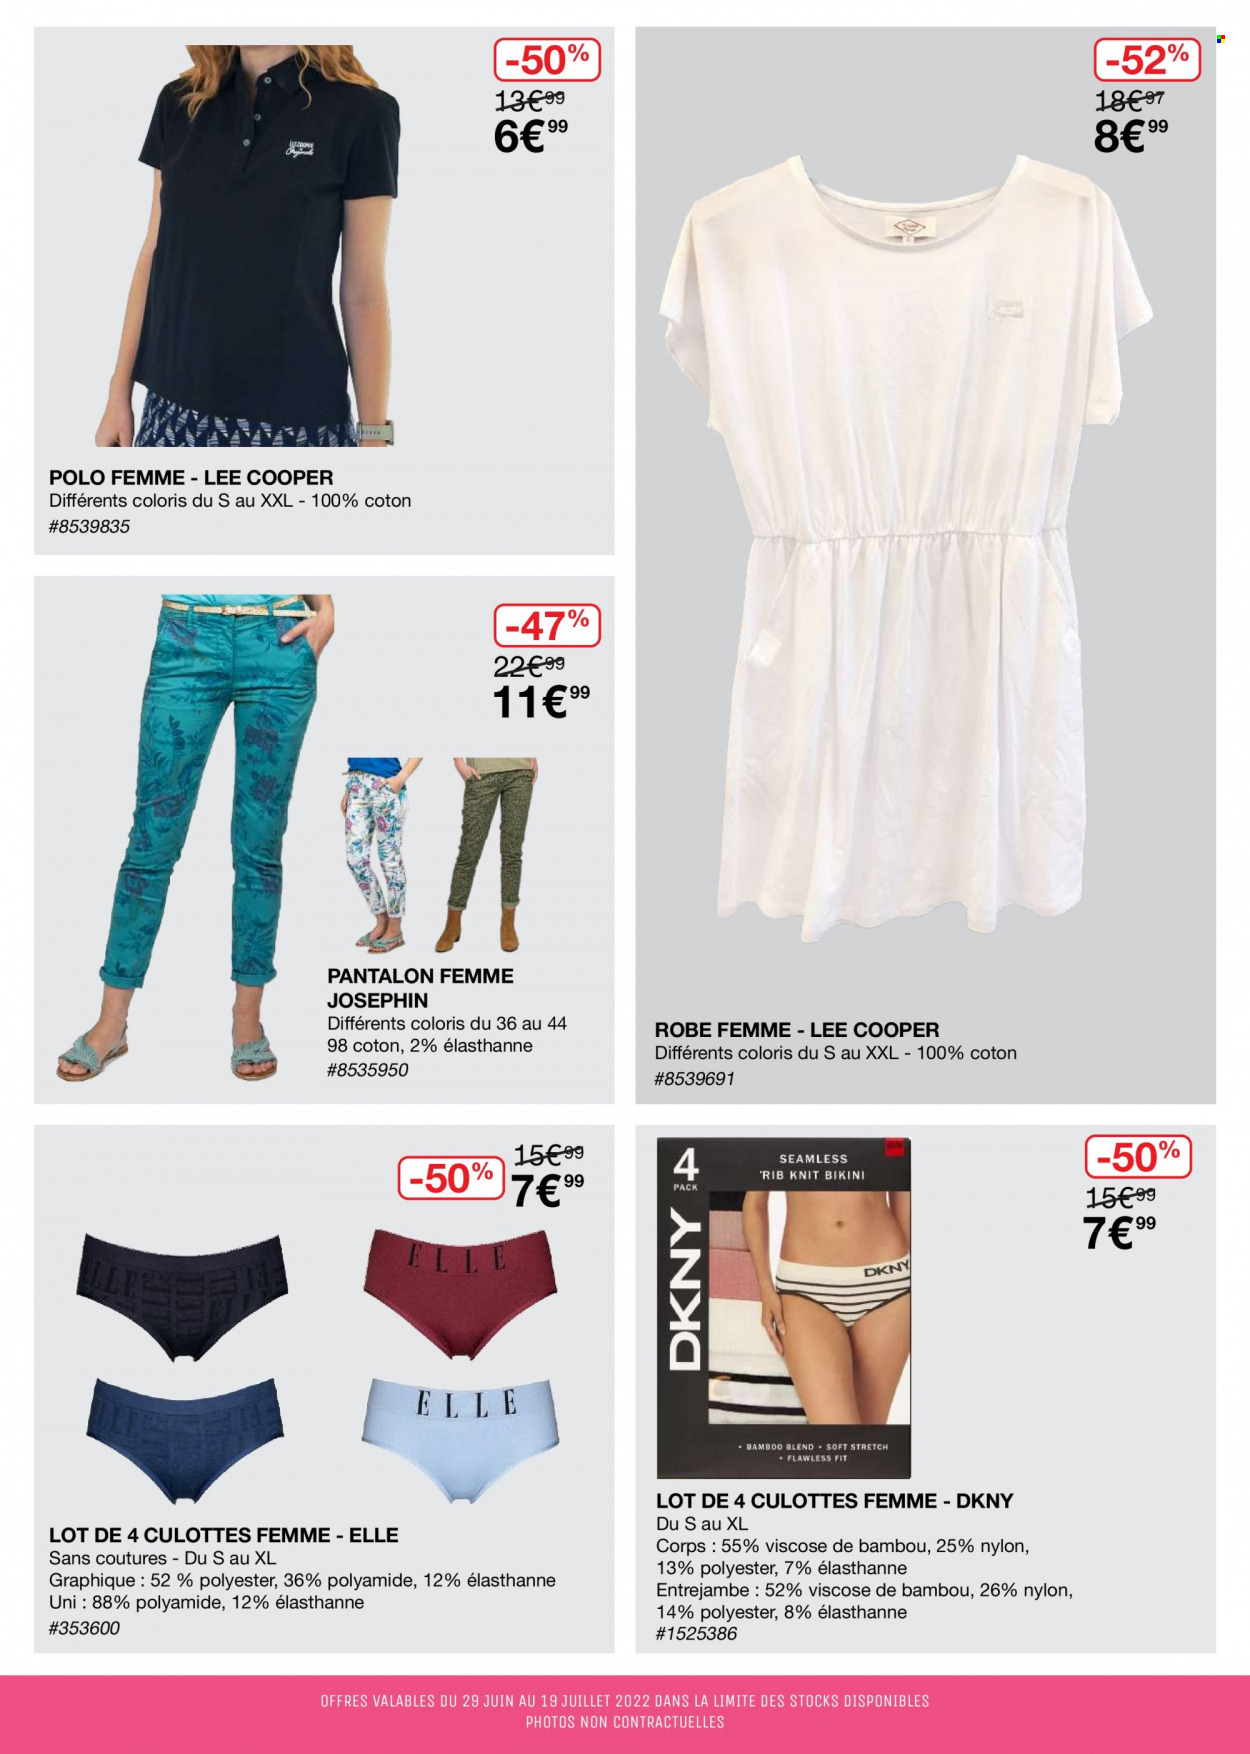 thumbnail - Catalogue Costco - 29/06/2022 - 19/07/2022 - Produits soldés - DKNY, pantalon, robe, t-shirt, culotte, bambou. Page 5.